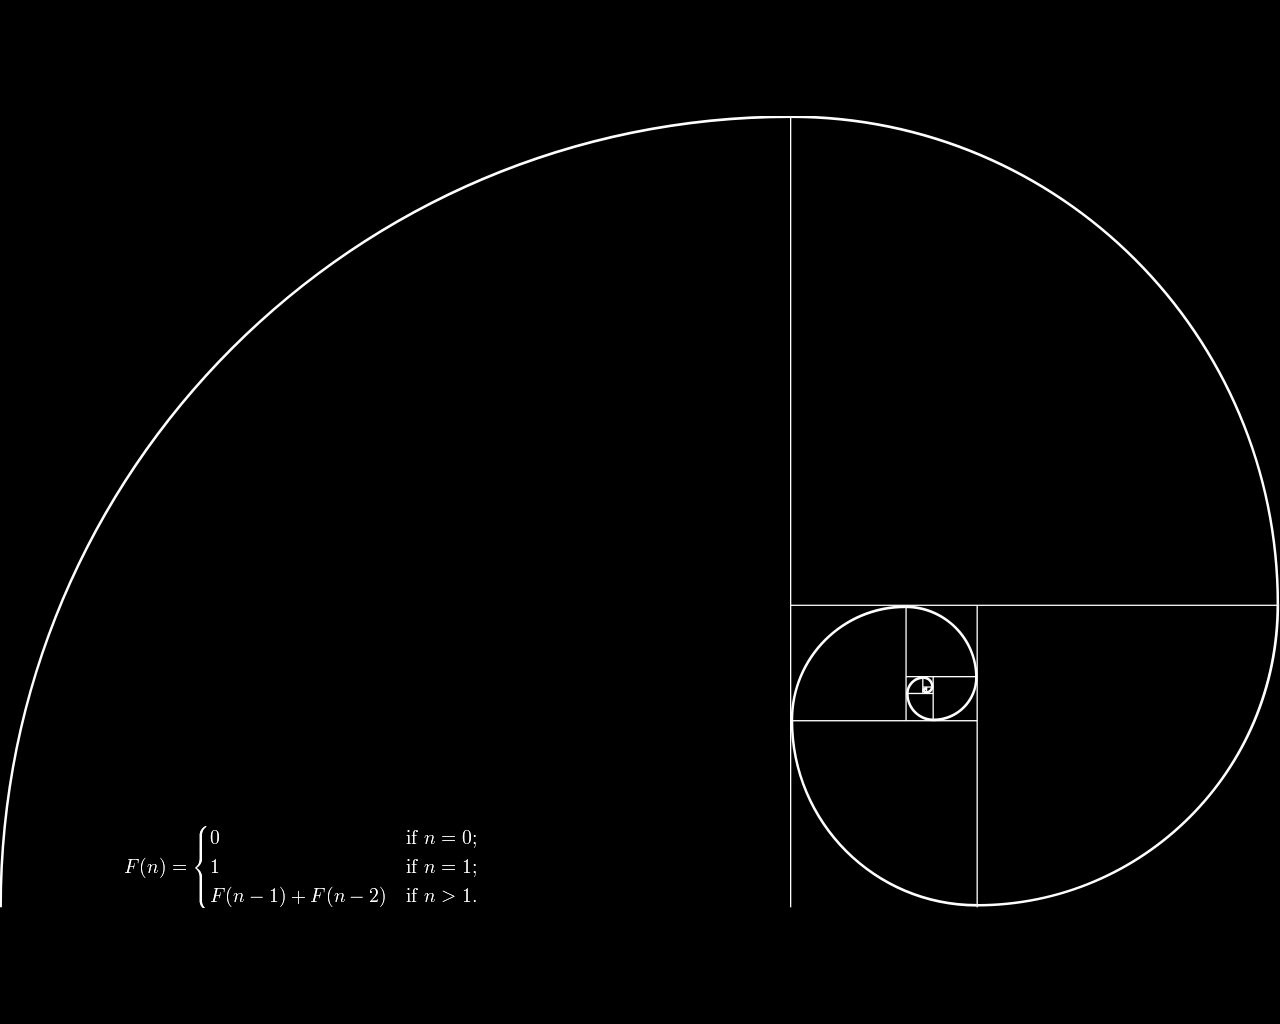 General 1280x1024 minimalism Fibonacci sequence golden ratio mathematics spiral square black background numbers geometry monochrome